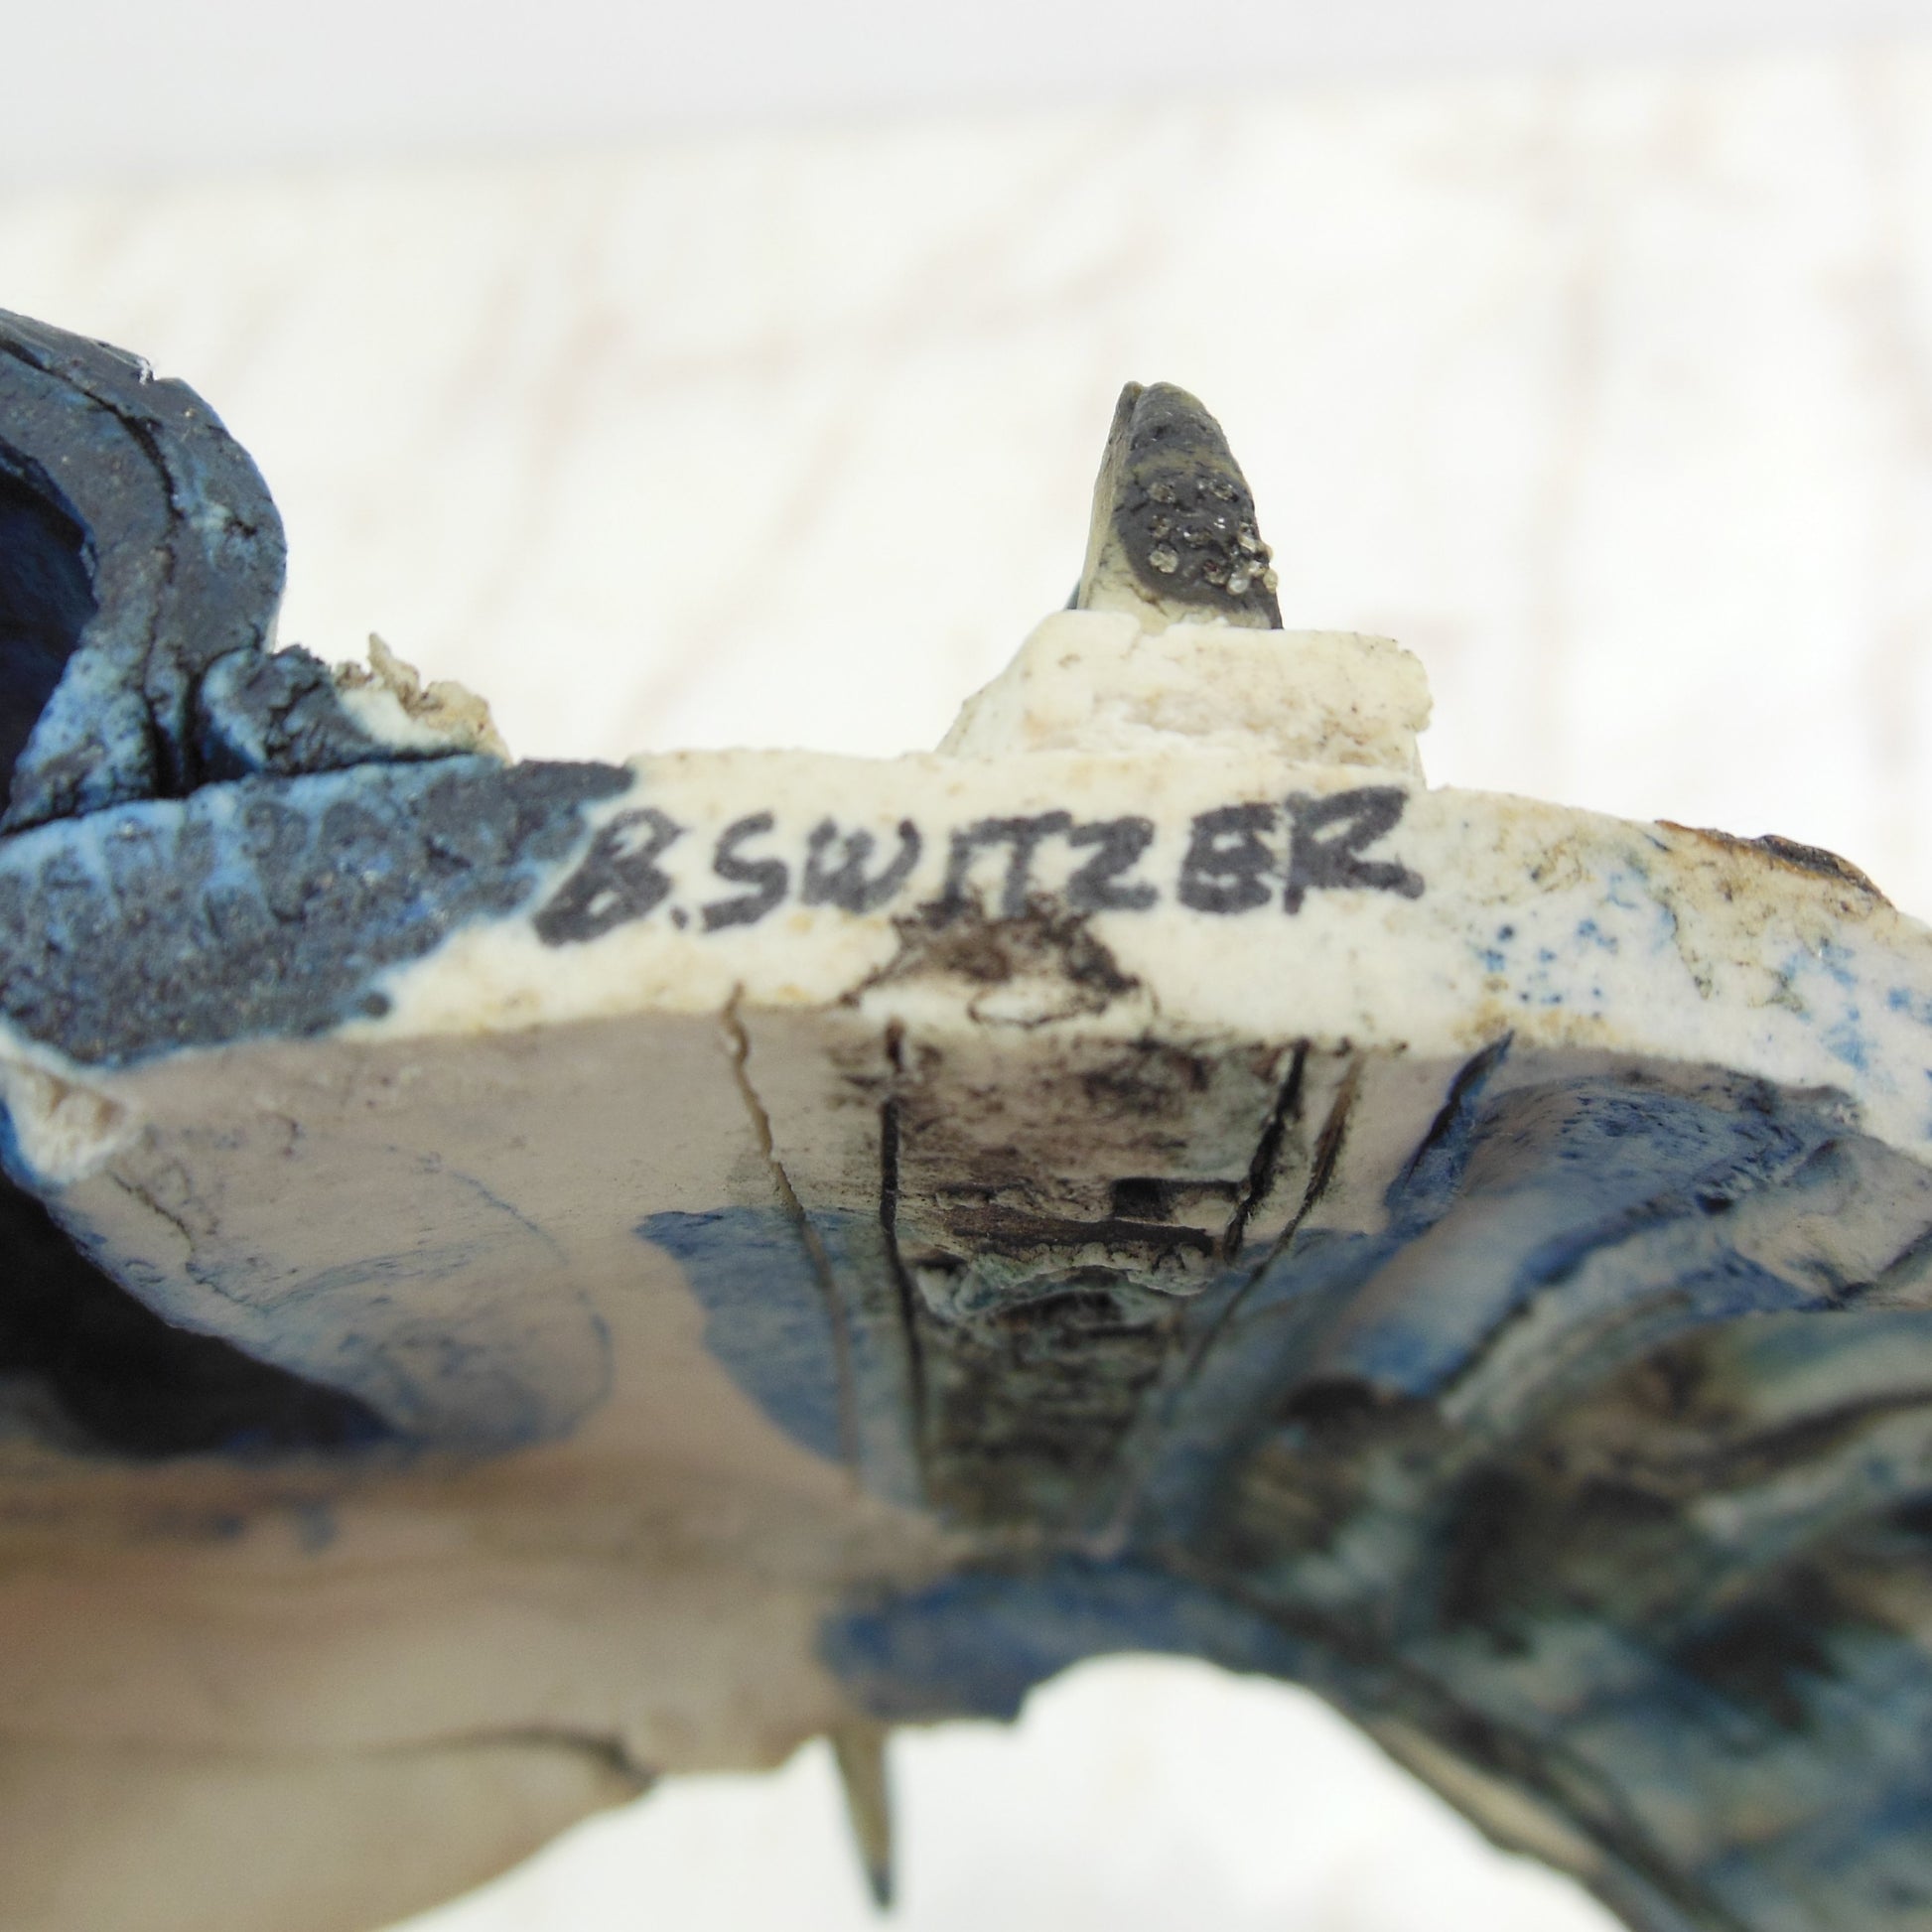 B. Switzer Signed Ceramic Pottery Art Sculpture mark